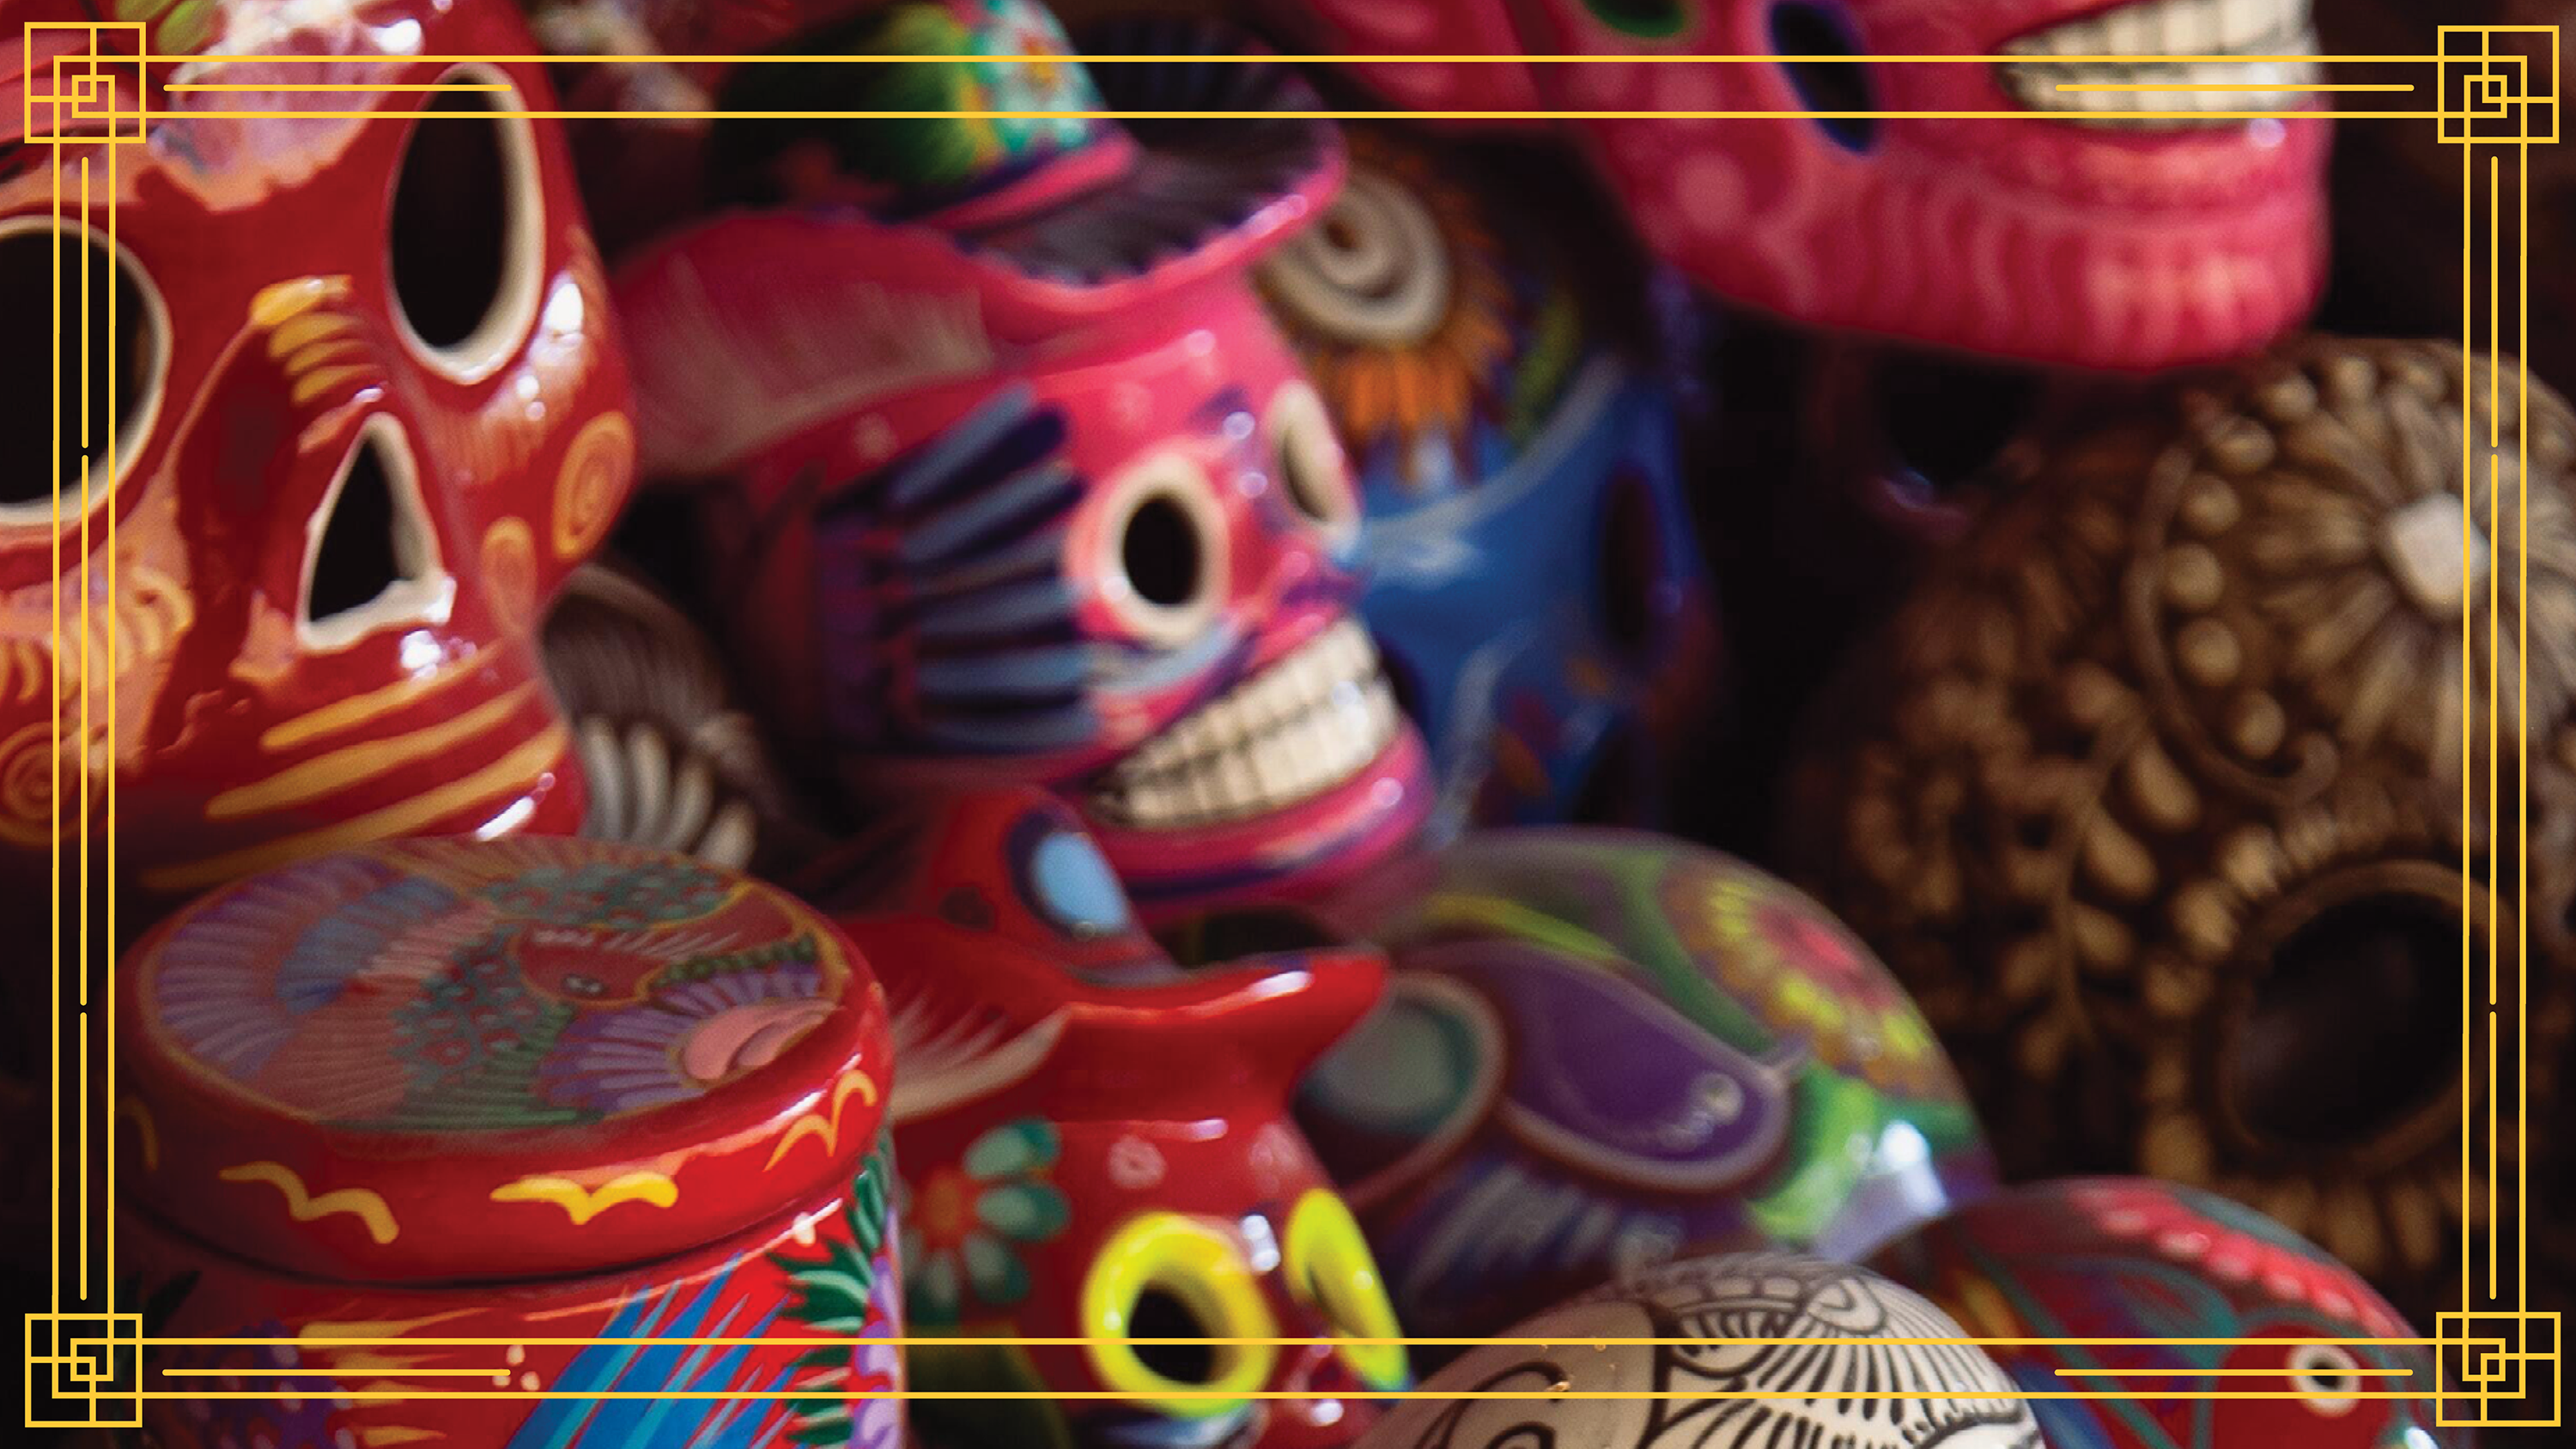 colorfully decorated sugar skulls